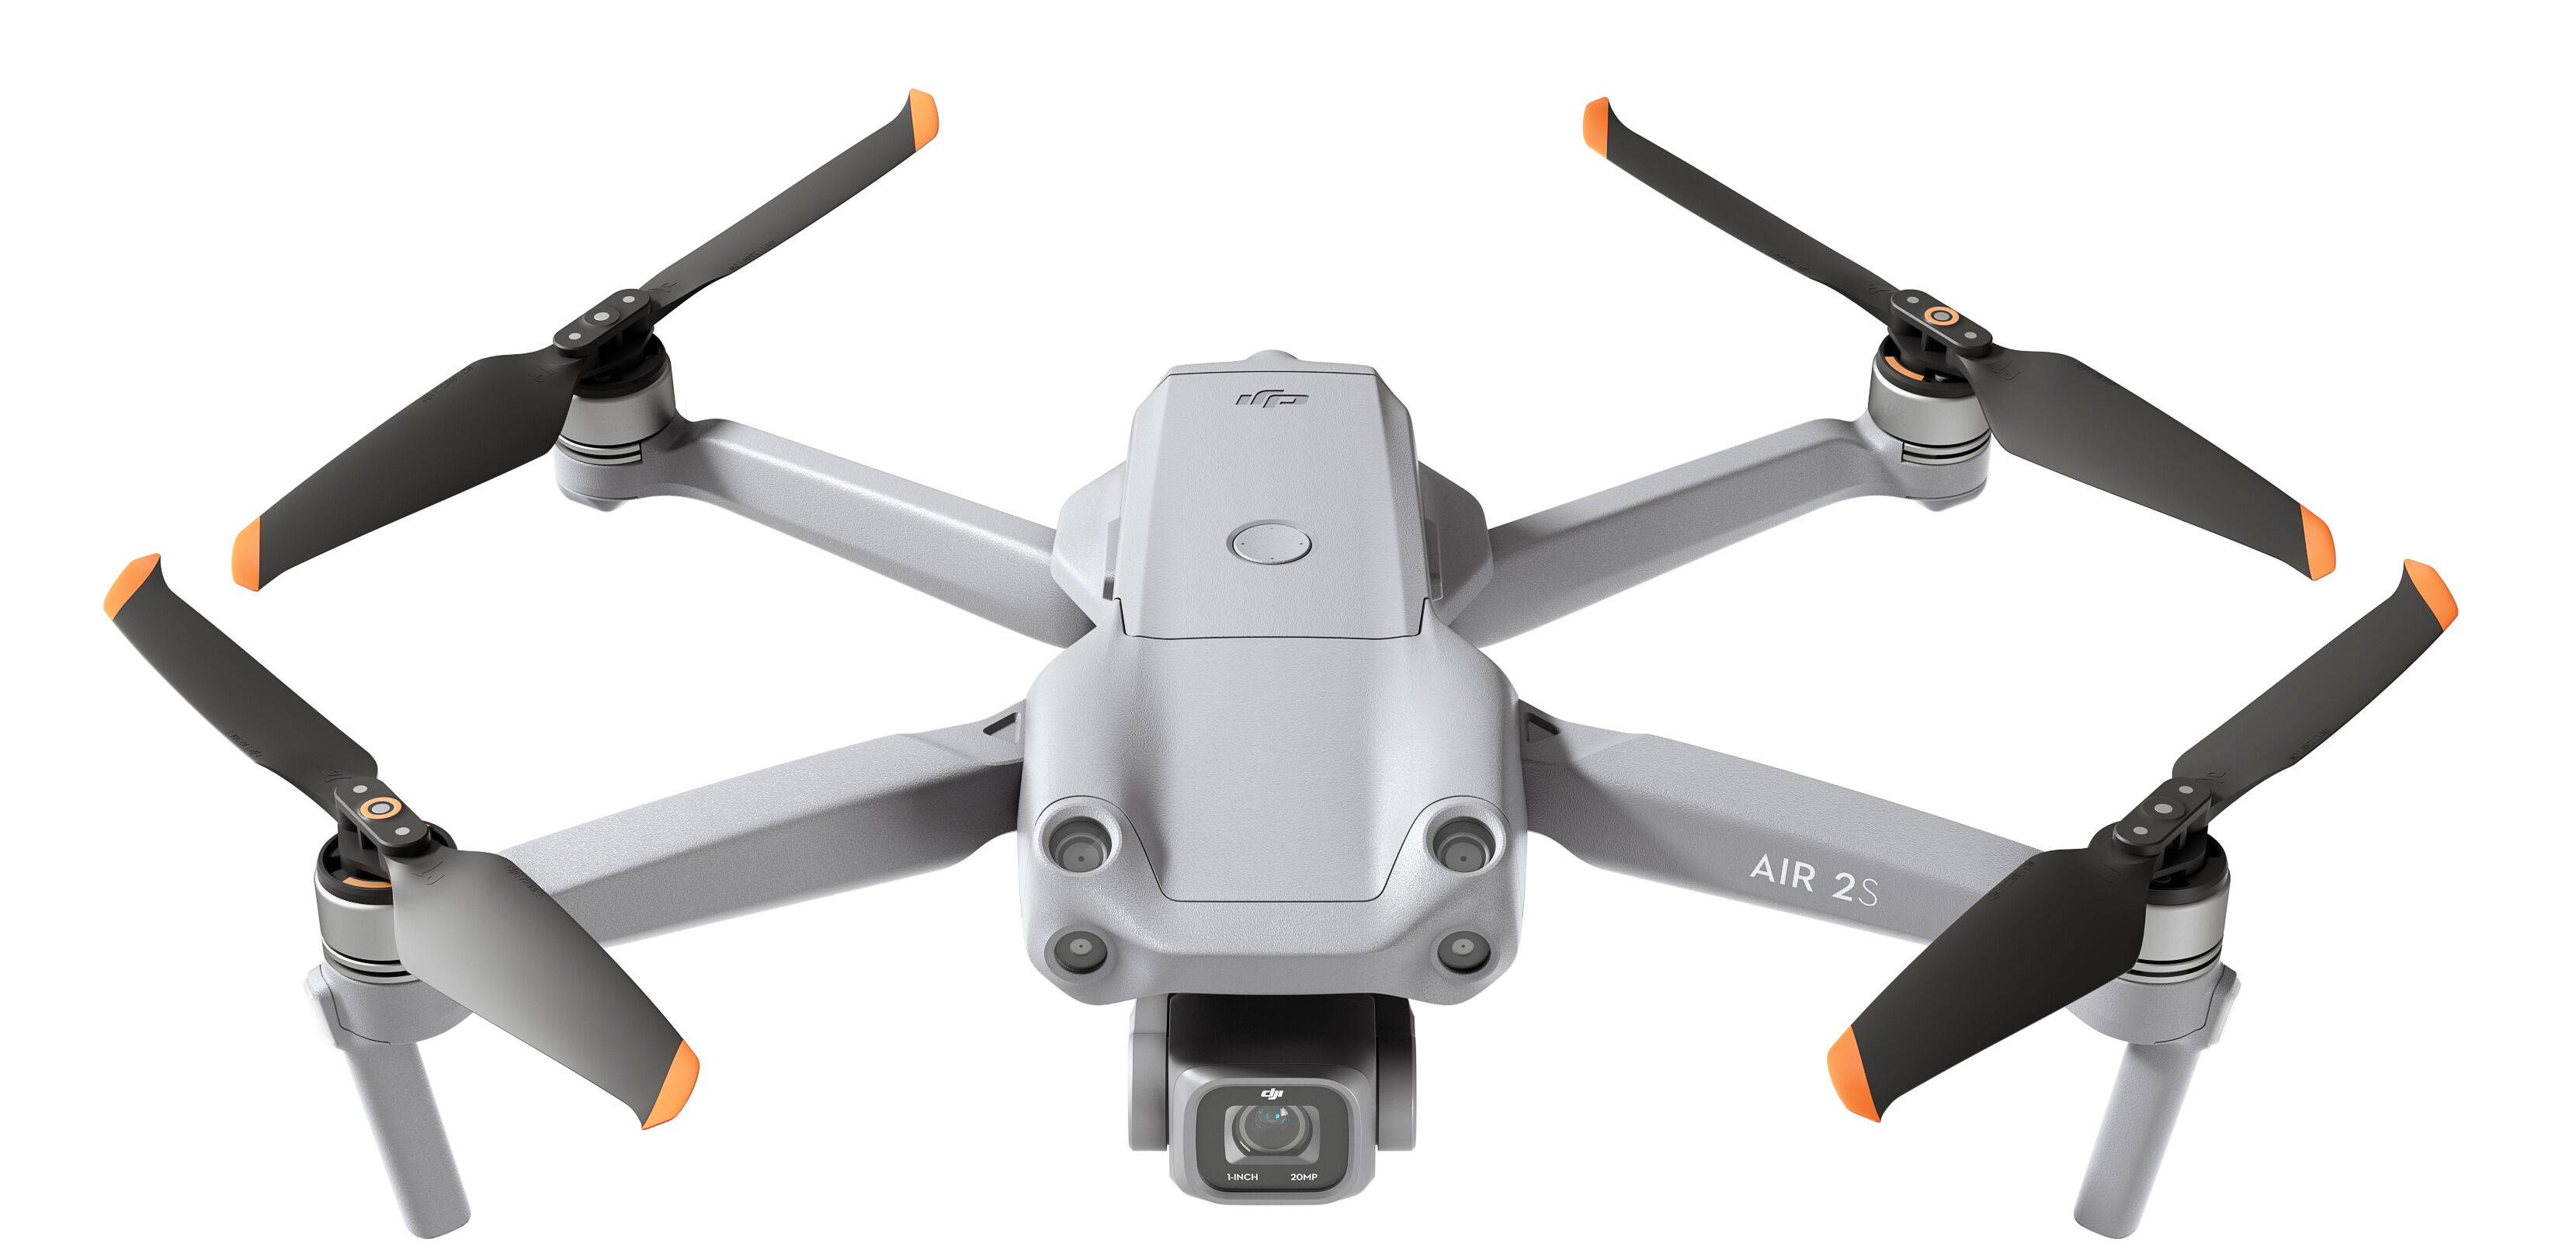 DJI Drone Air 2s